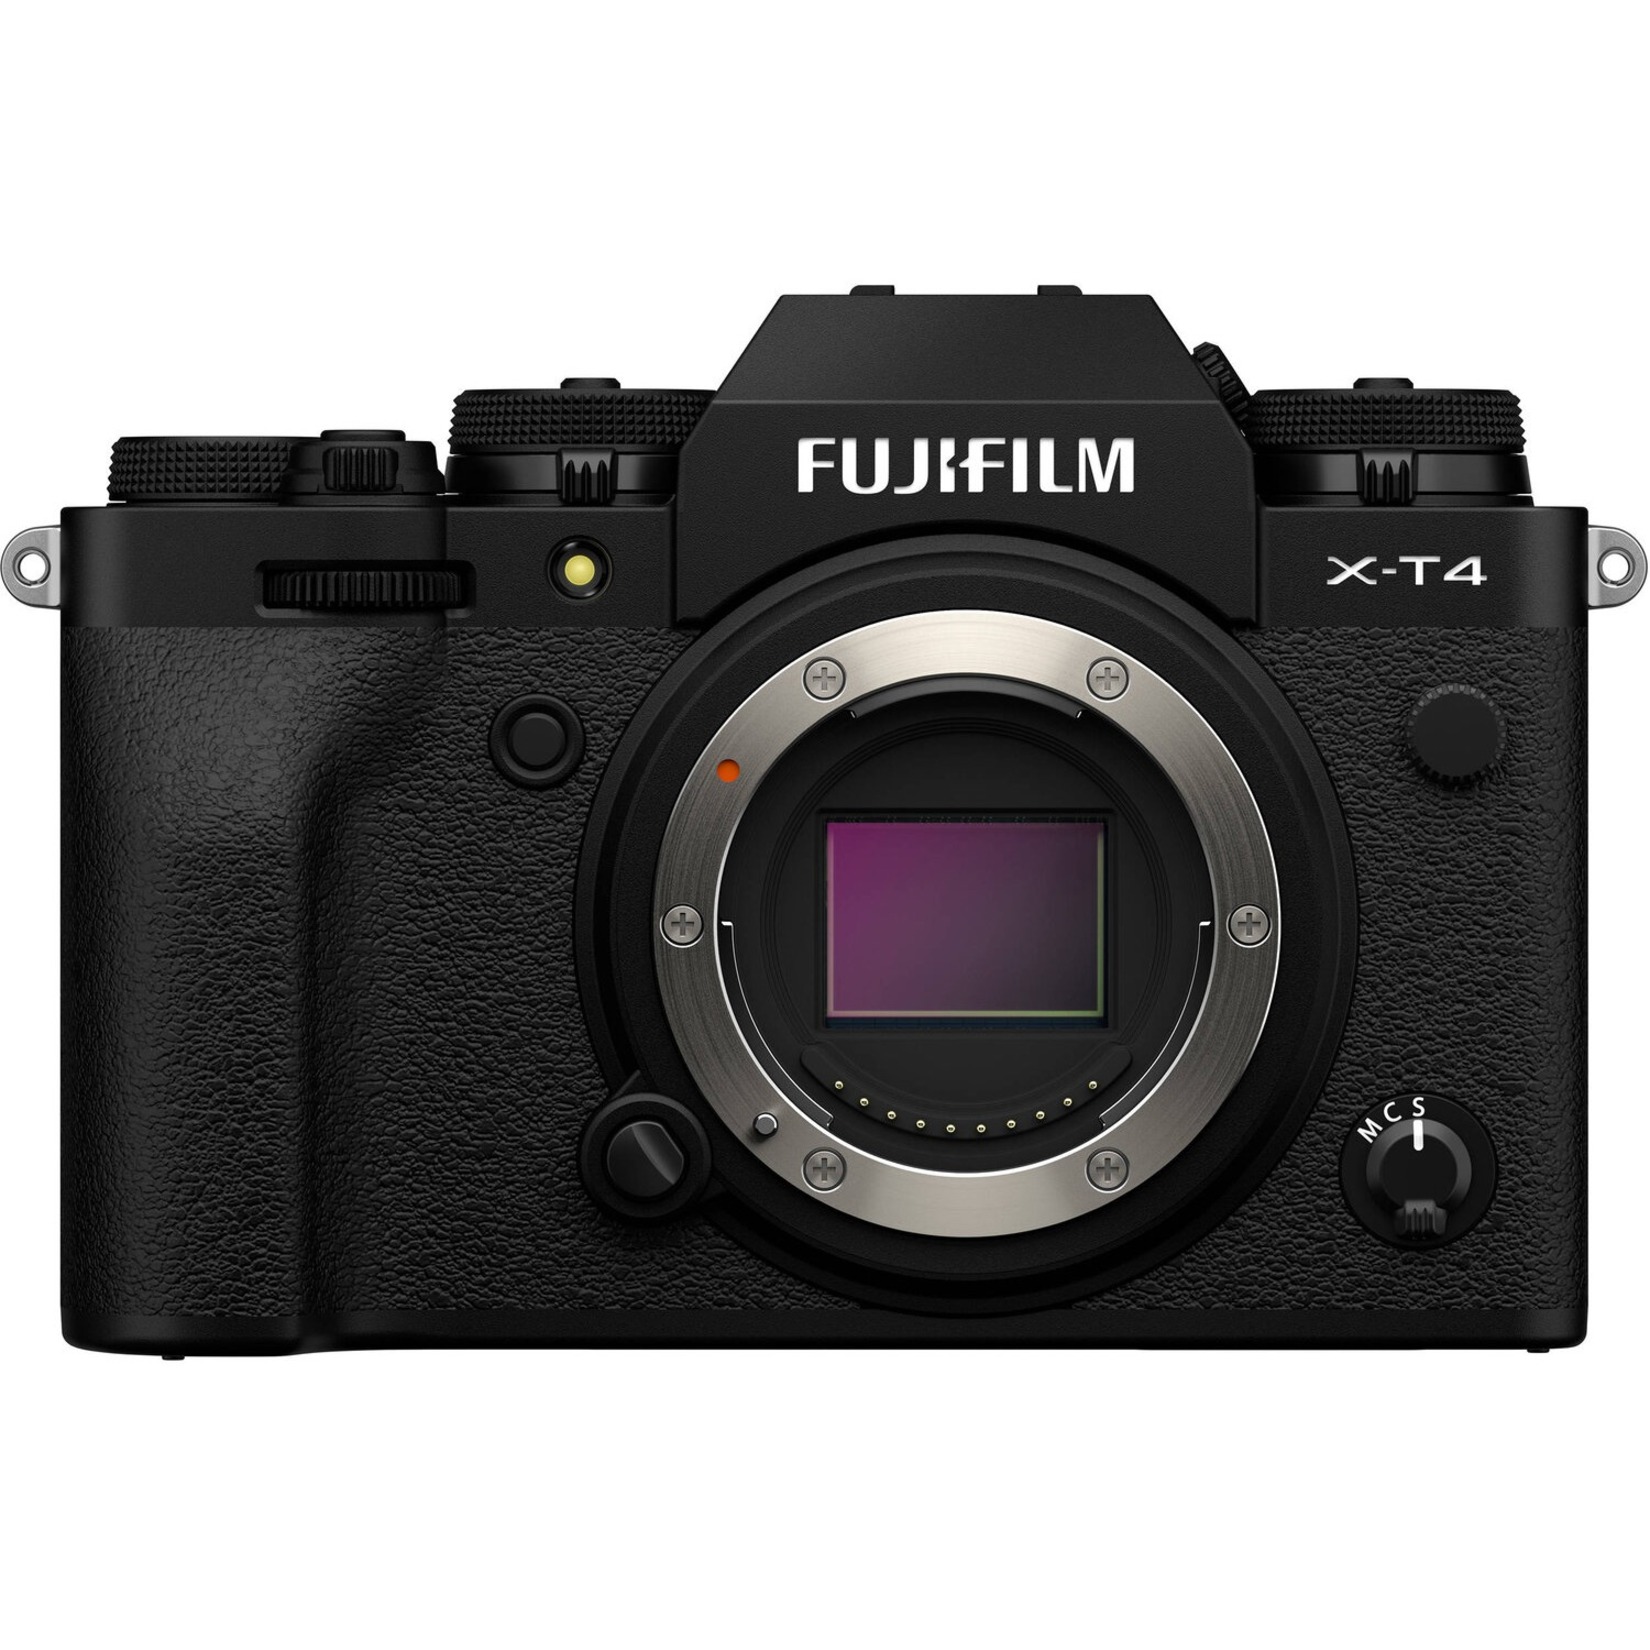 Fujifilm X-T4 26.1 Megapixel Mirrorless Camera Body Only, Black - image 1 of 10